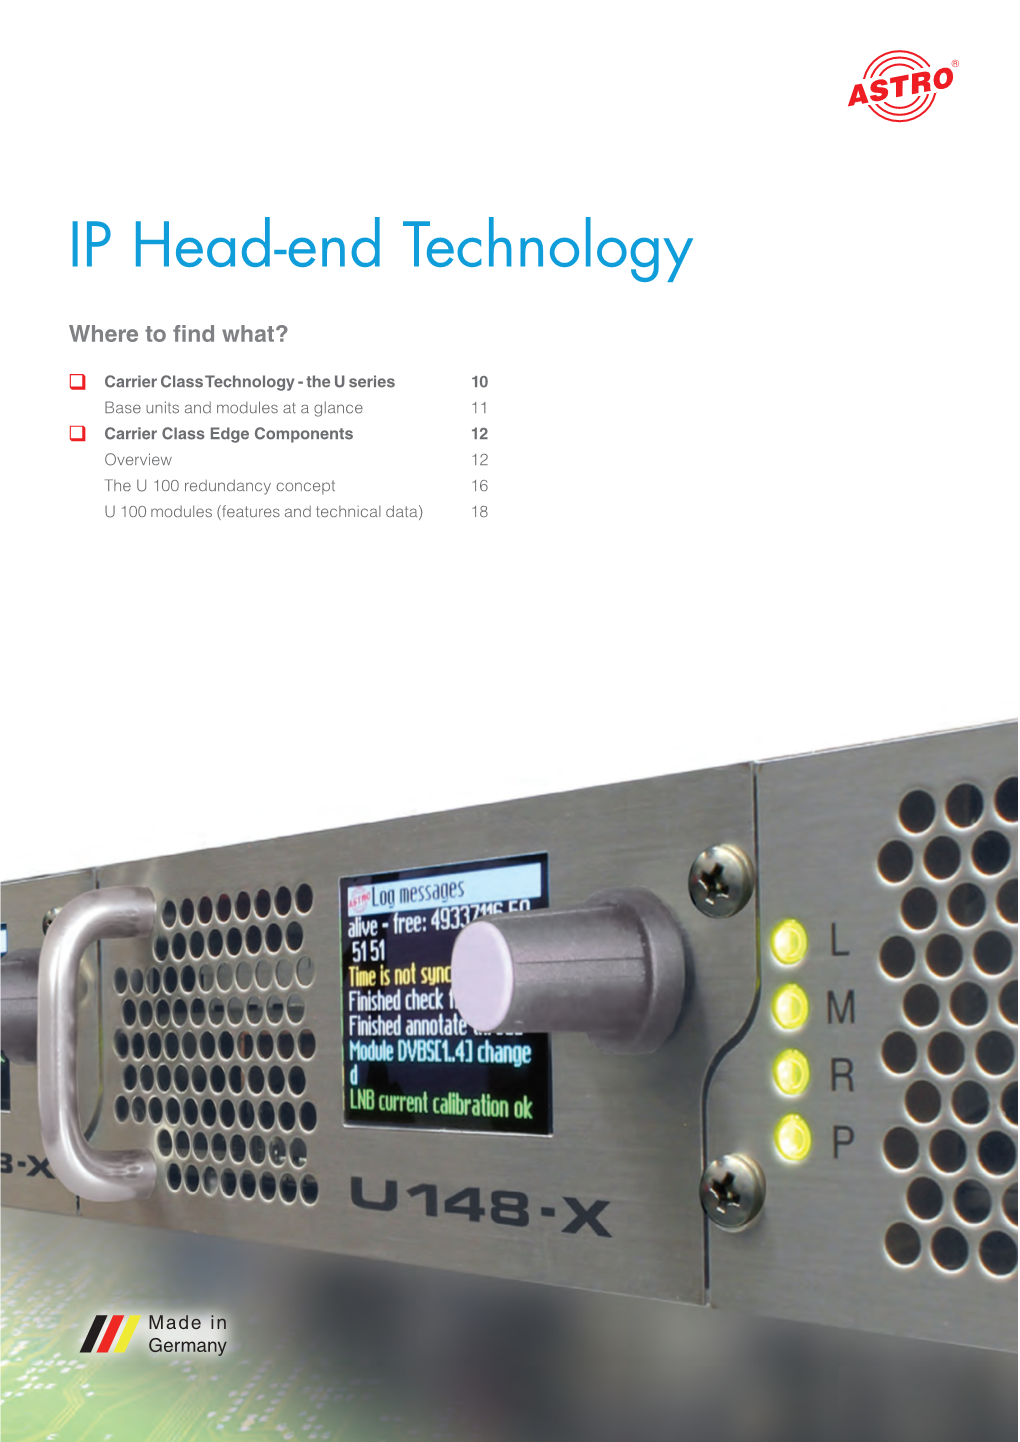 Astro IP Head-End Technology.Pdf